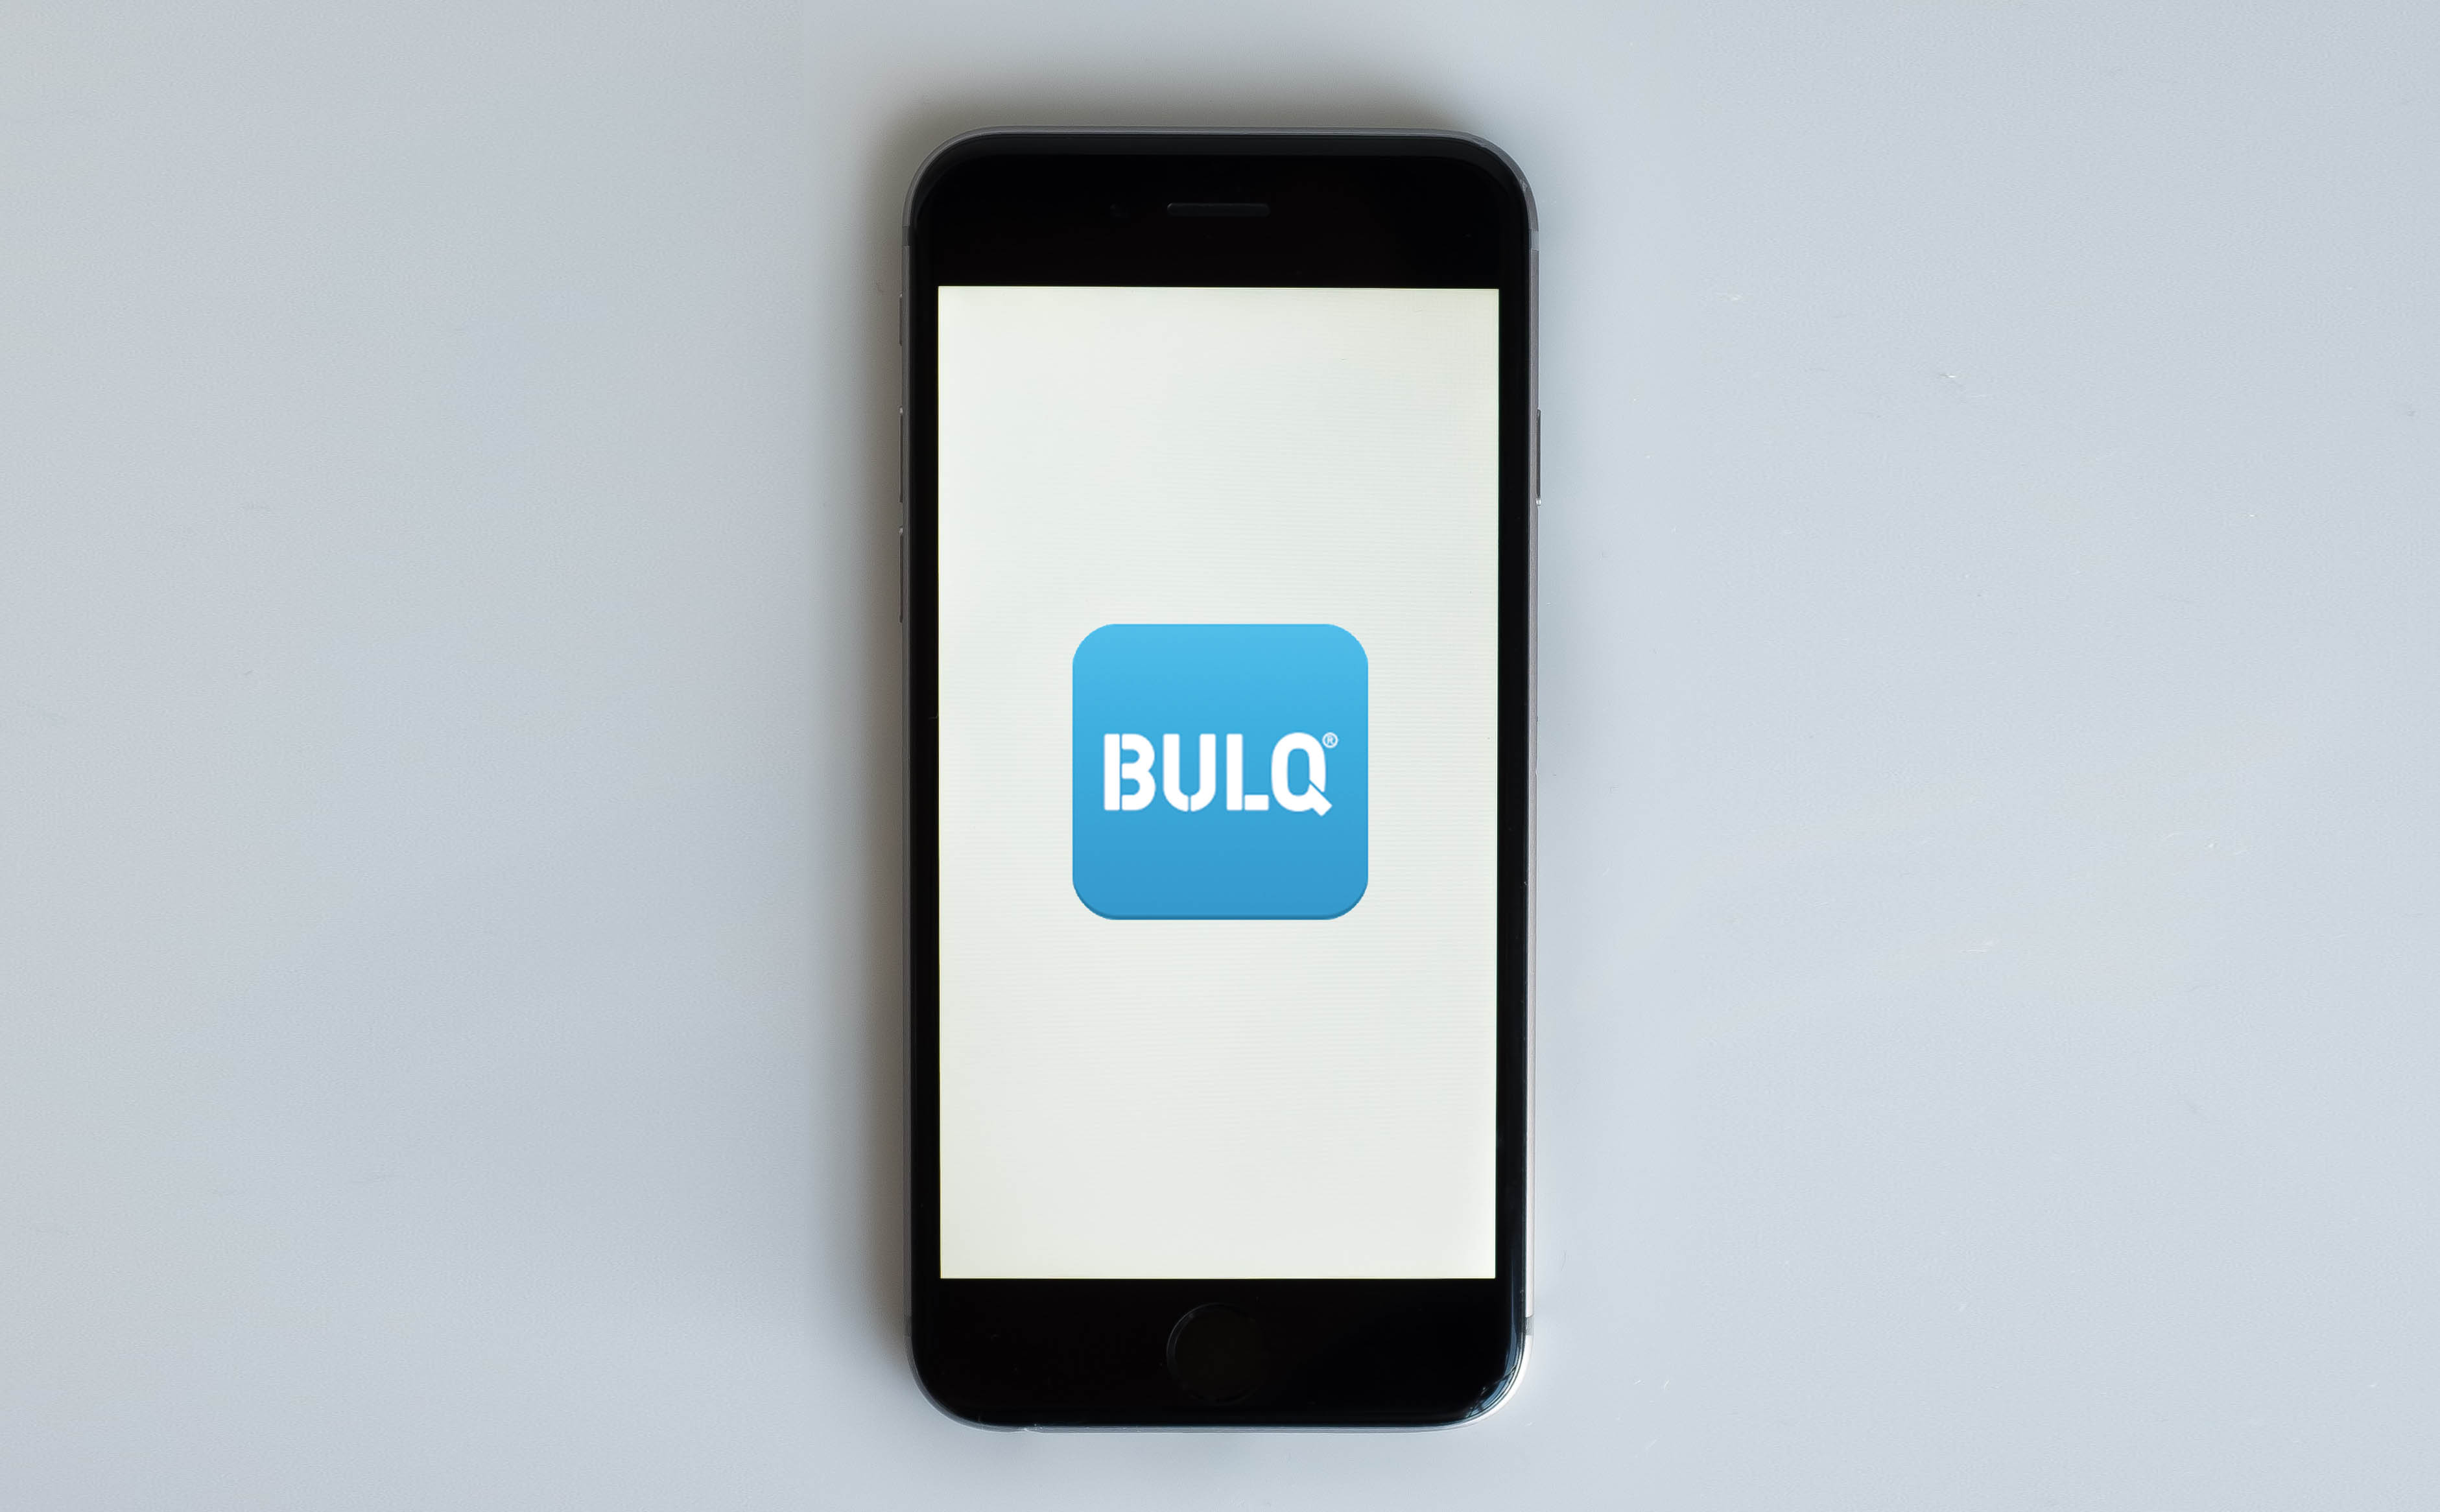 BULQ app icon on phone